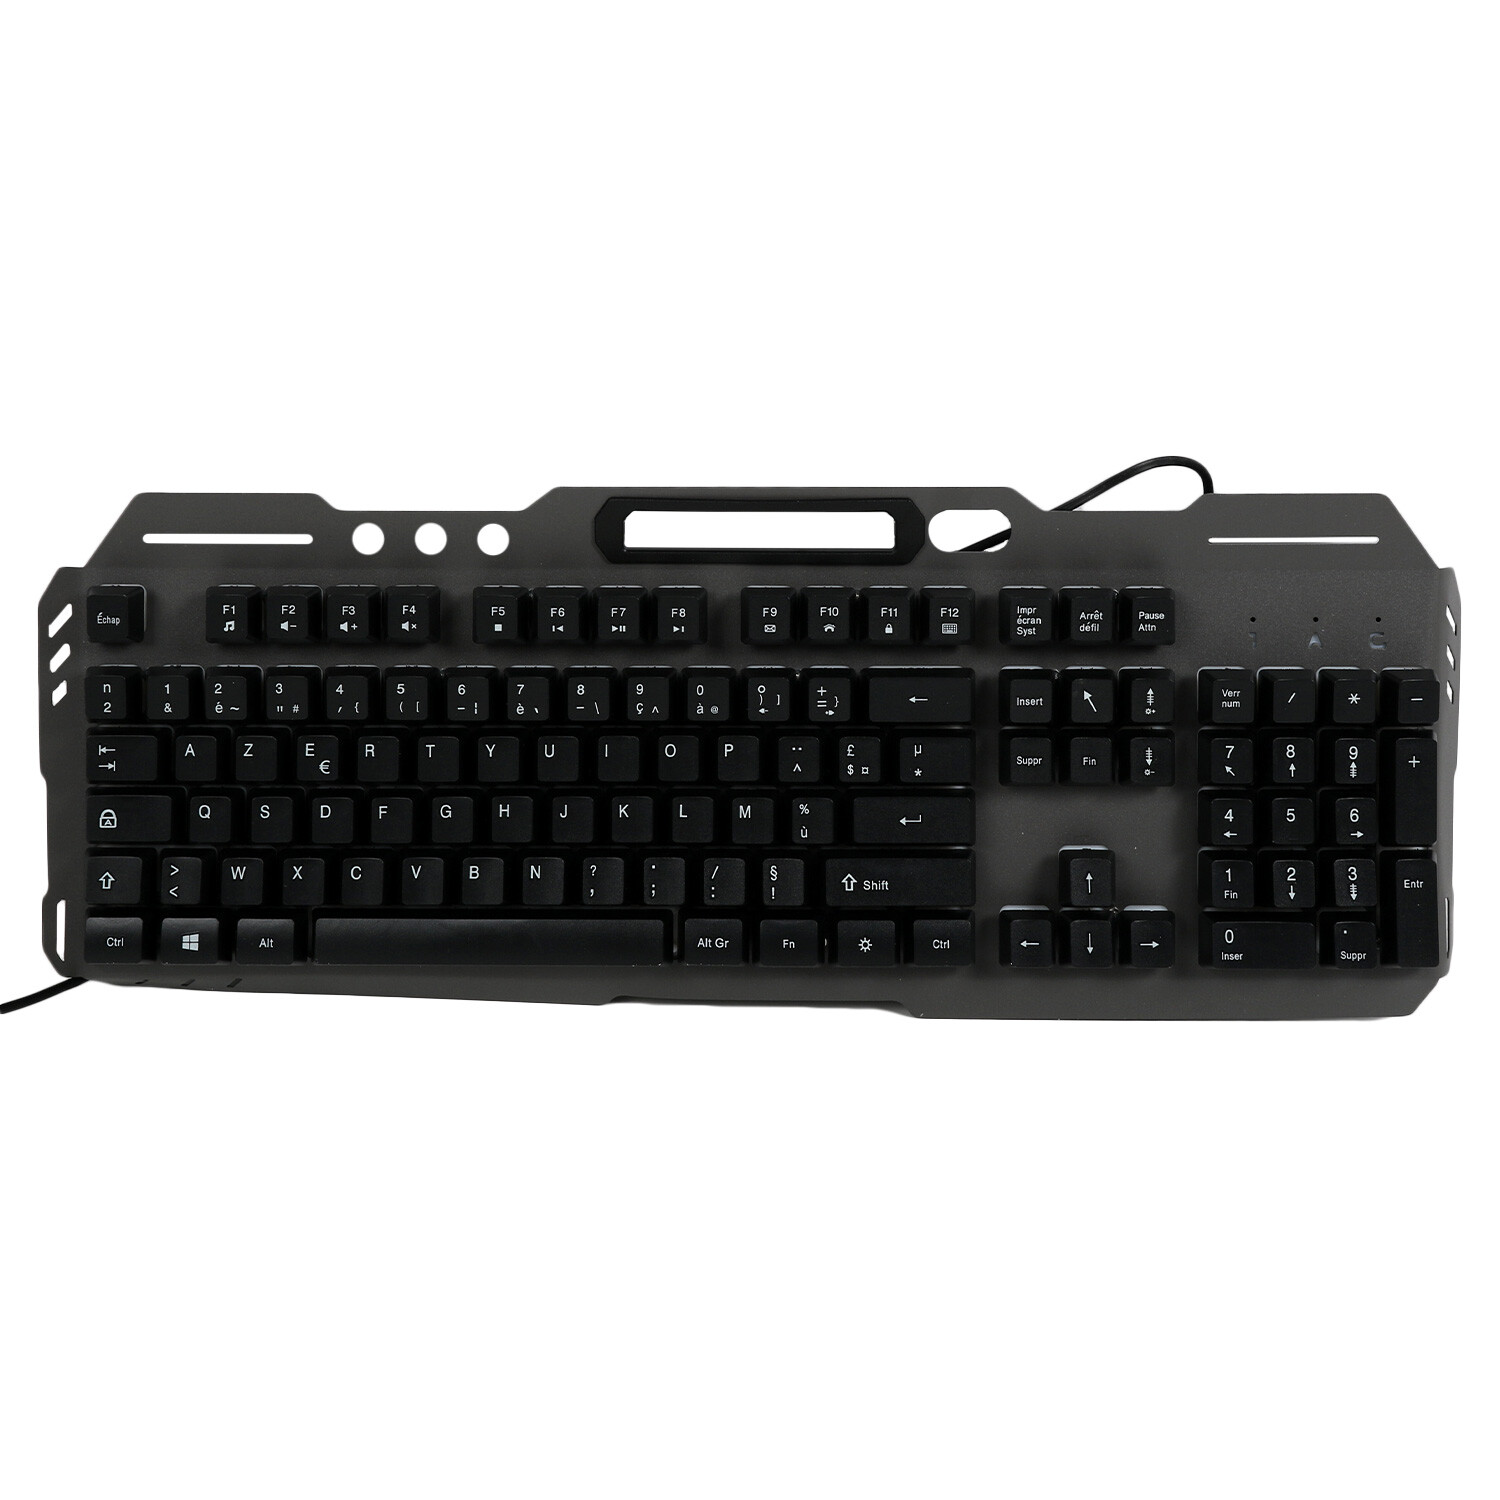 Black 7 Colour LED Backlight Gaming Keyboard Image 2